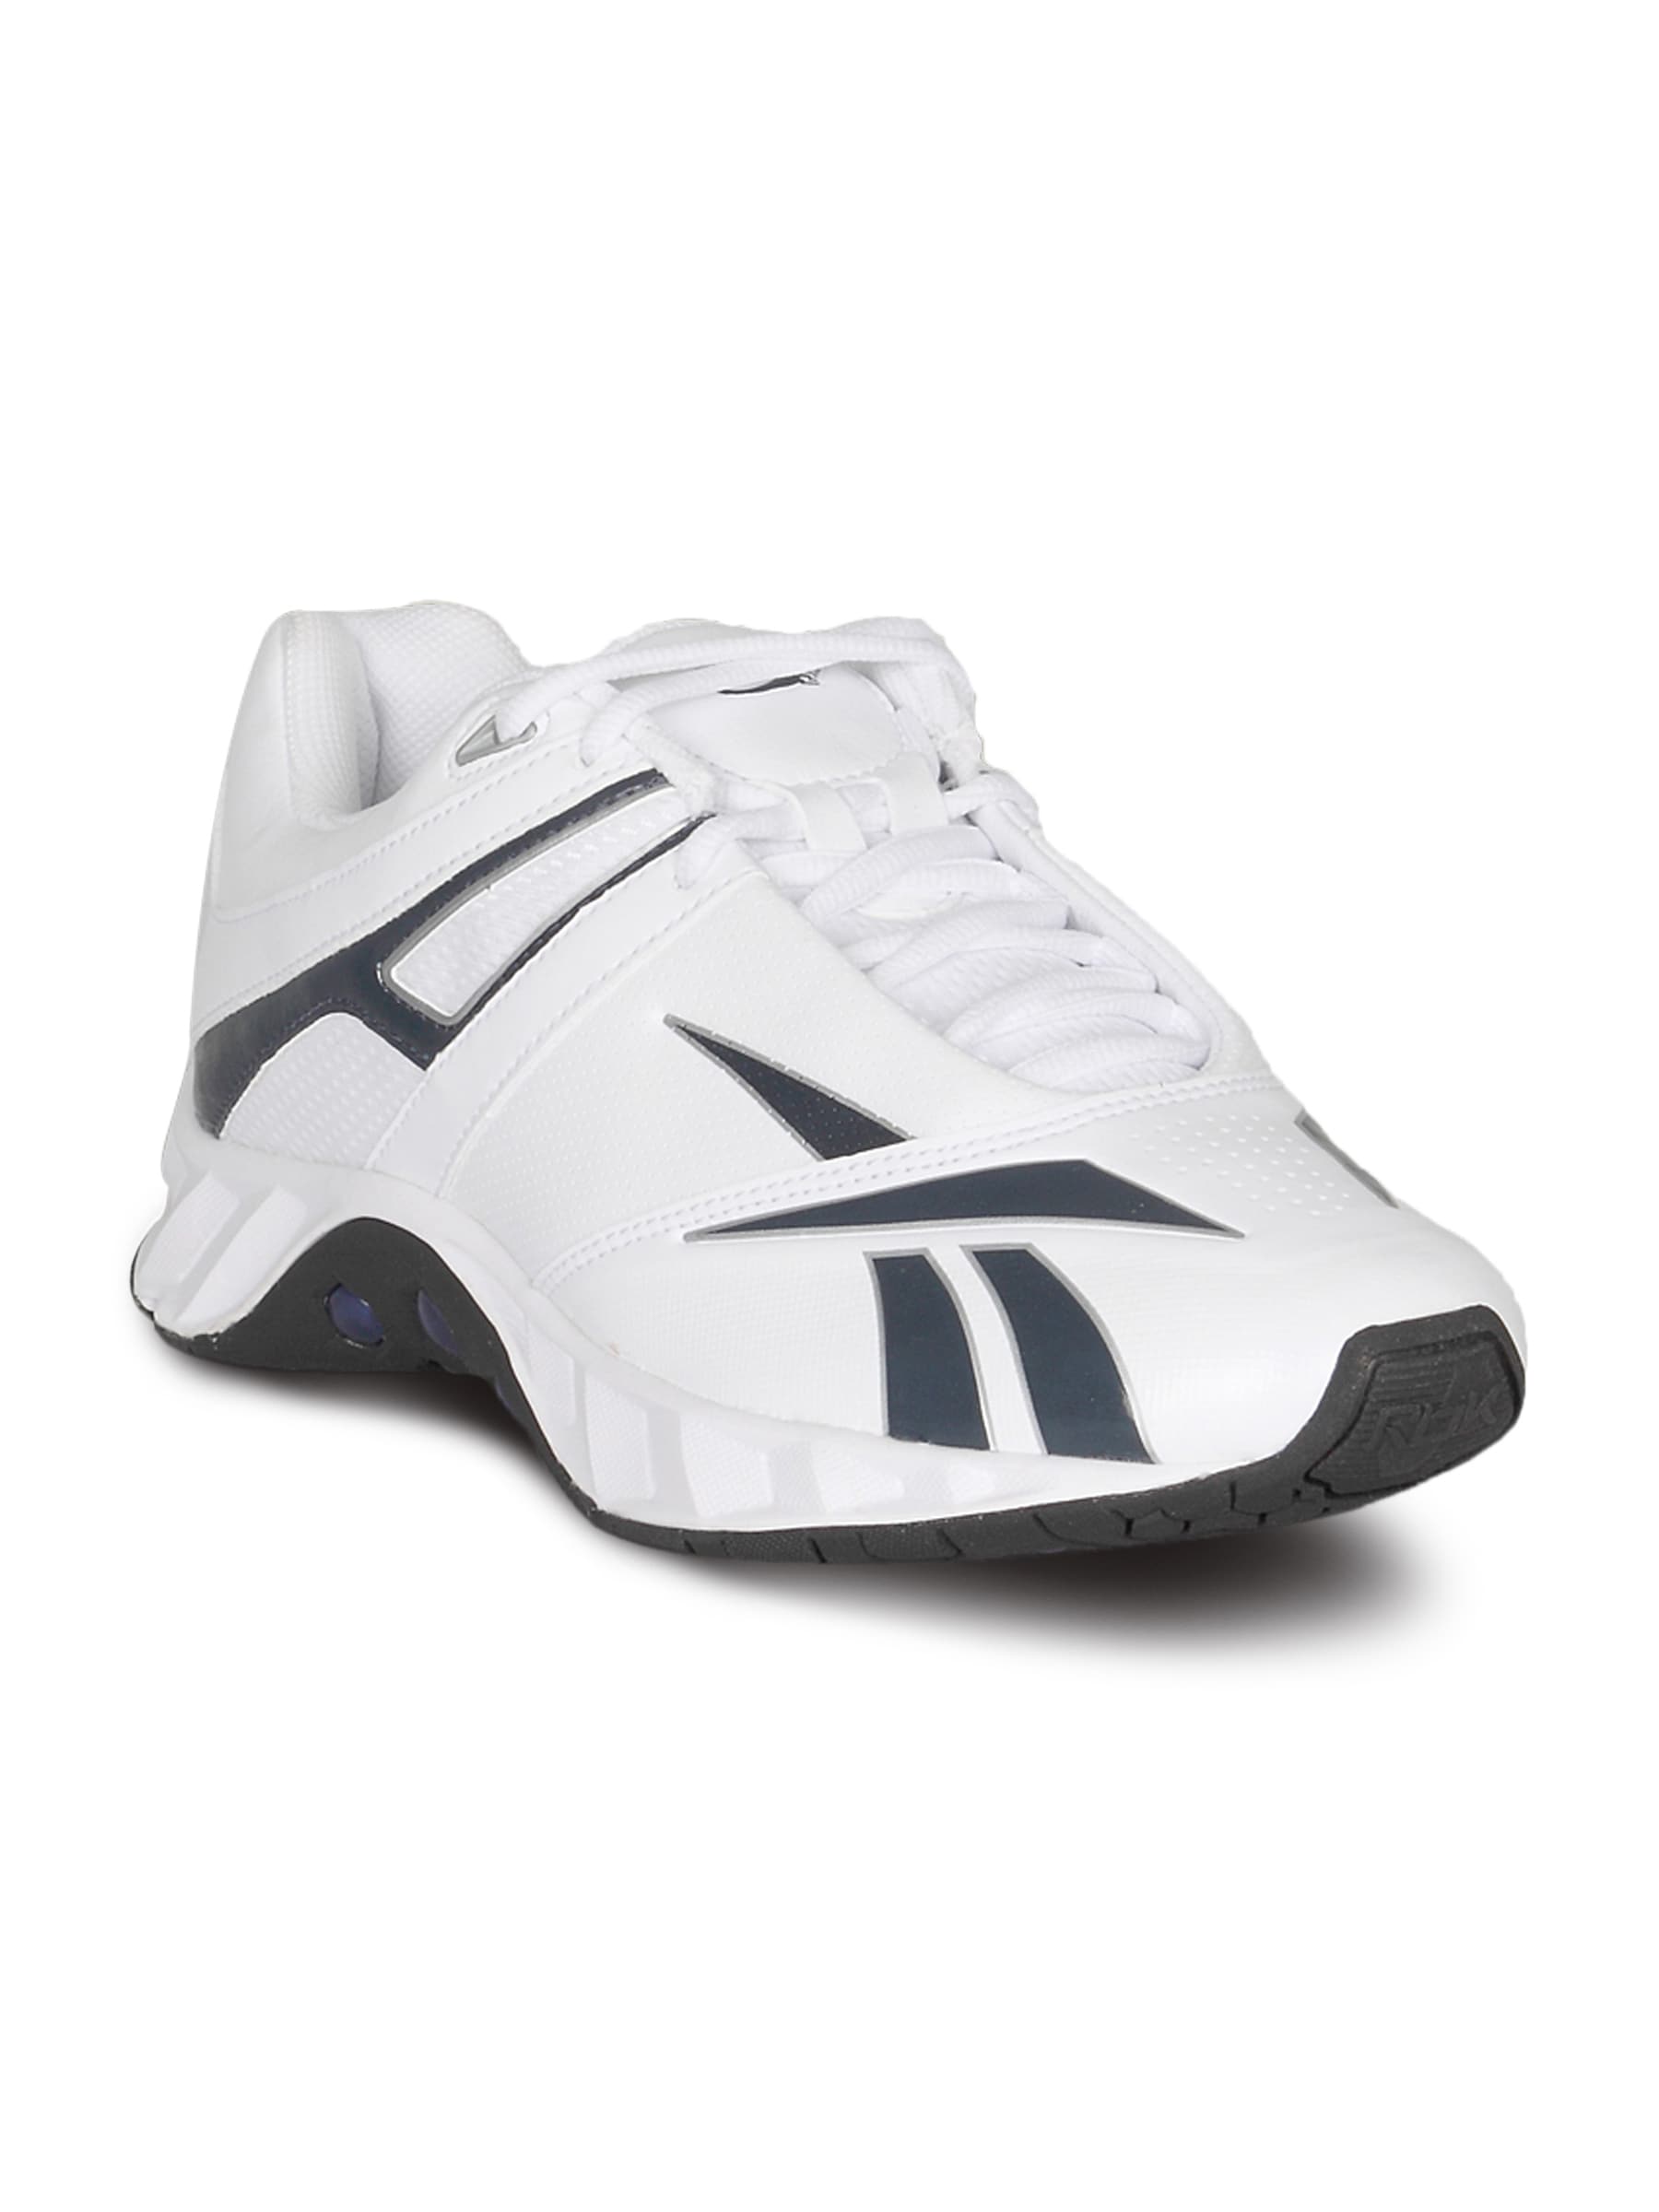 Reebok Men's Dhoni Trainer White Shoe